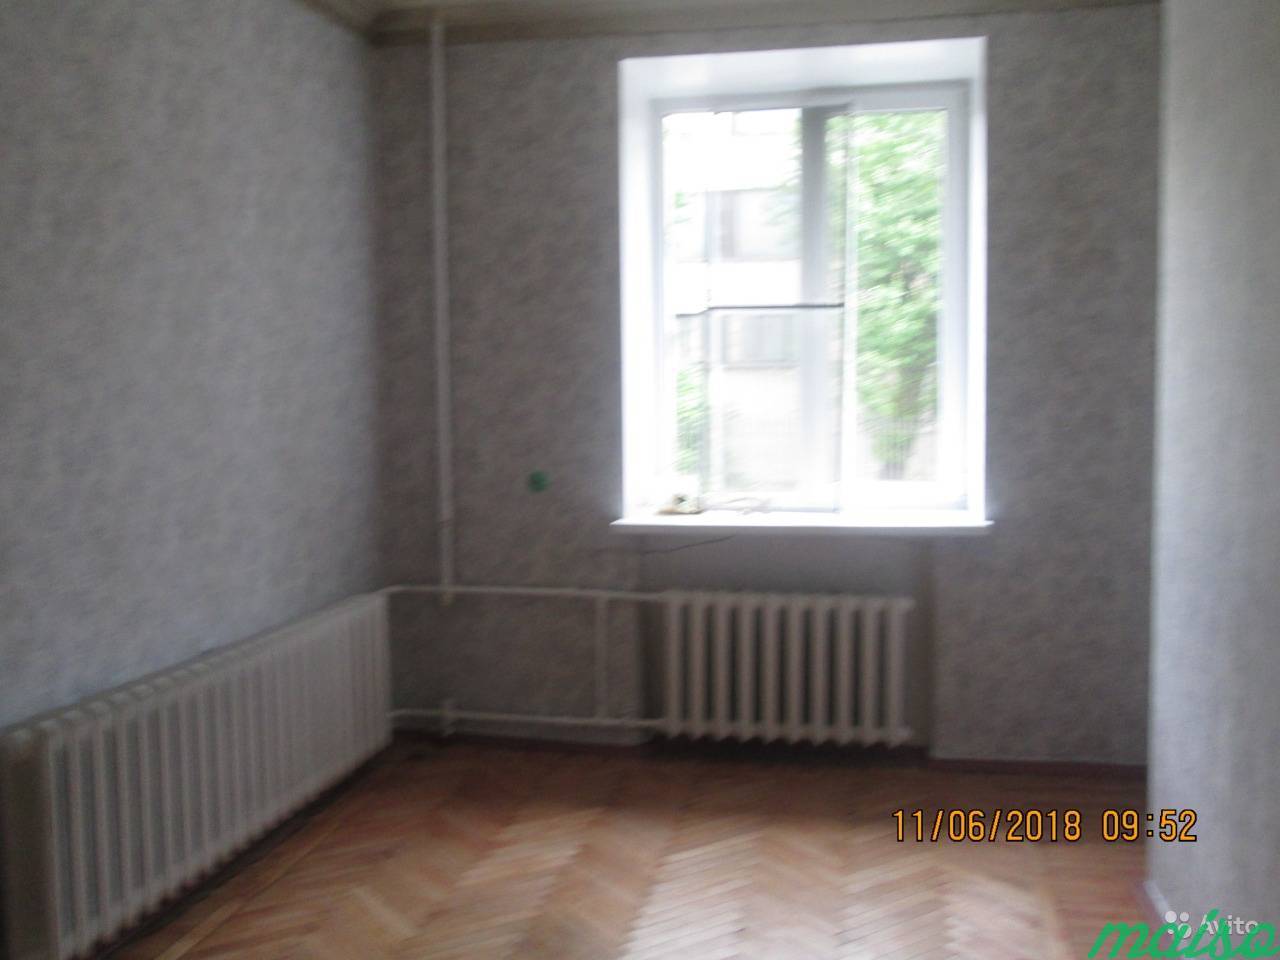 Комната 38 м² в 5-к, 1/5 эт. в Санкт-Петербурге. Фото 3